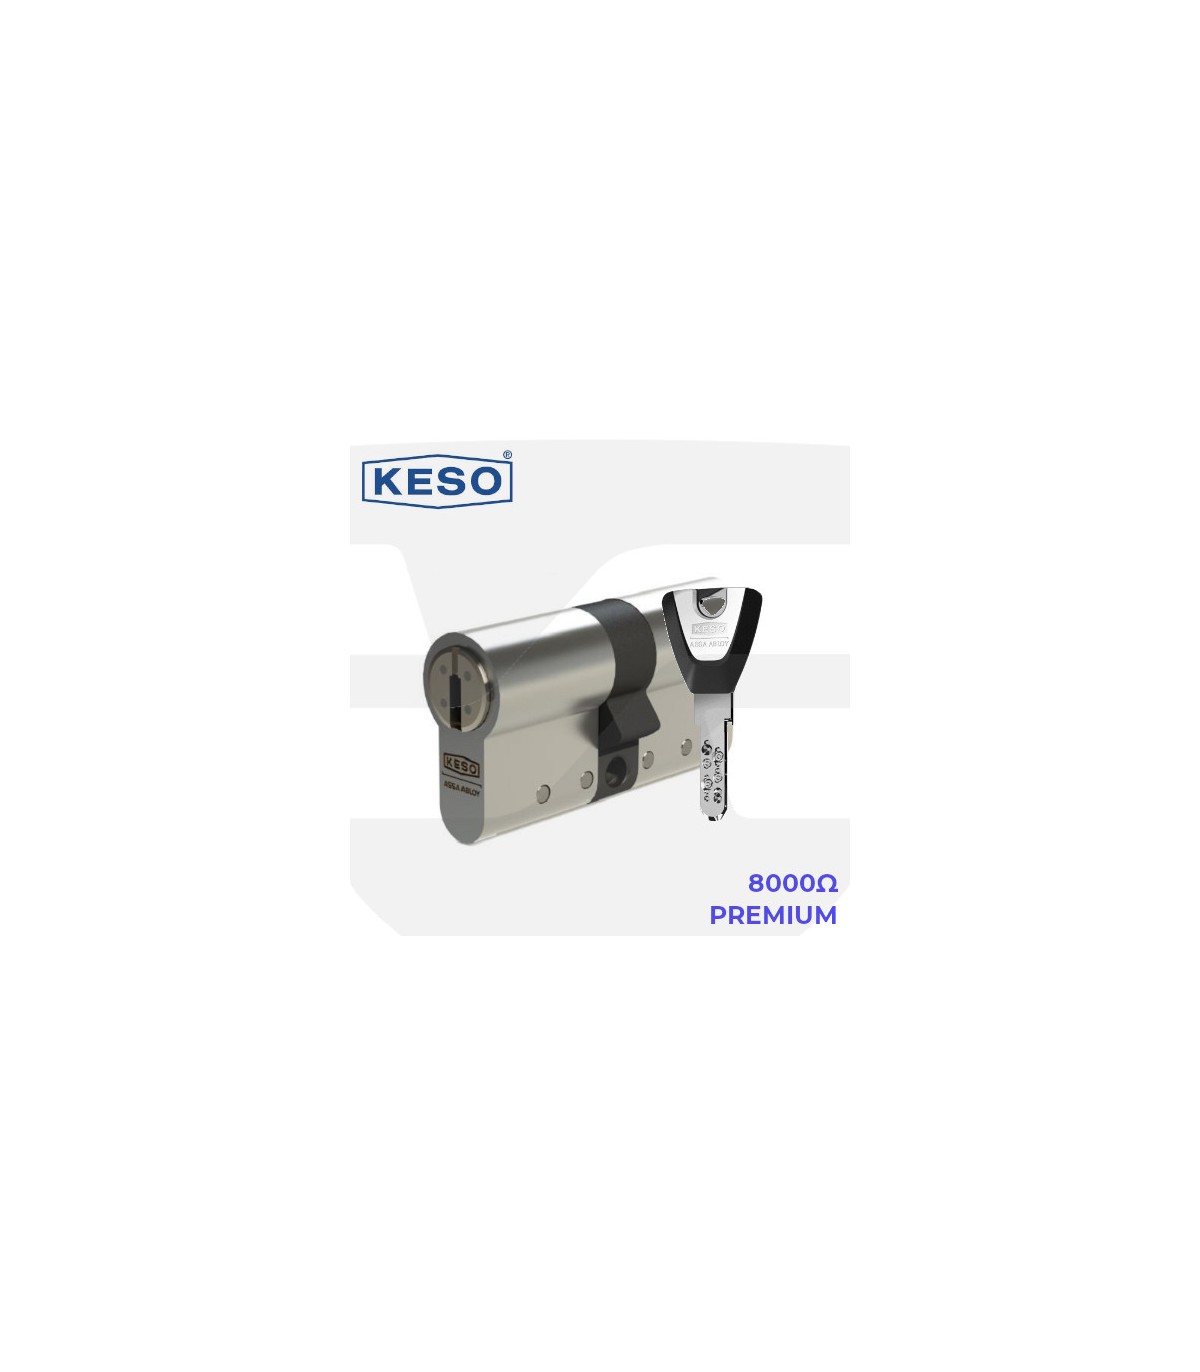 Cilindro KESO 8000 Ω2 PREMIUM - Ferresegur Color CROMO 1.CILINDRO NIQUELADO 60 mm. 30+30 LARGA keso llaves extra largo, 14 mm. 0.CILINDRO FUNCION Sin doble embrague